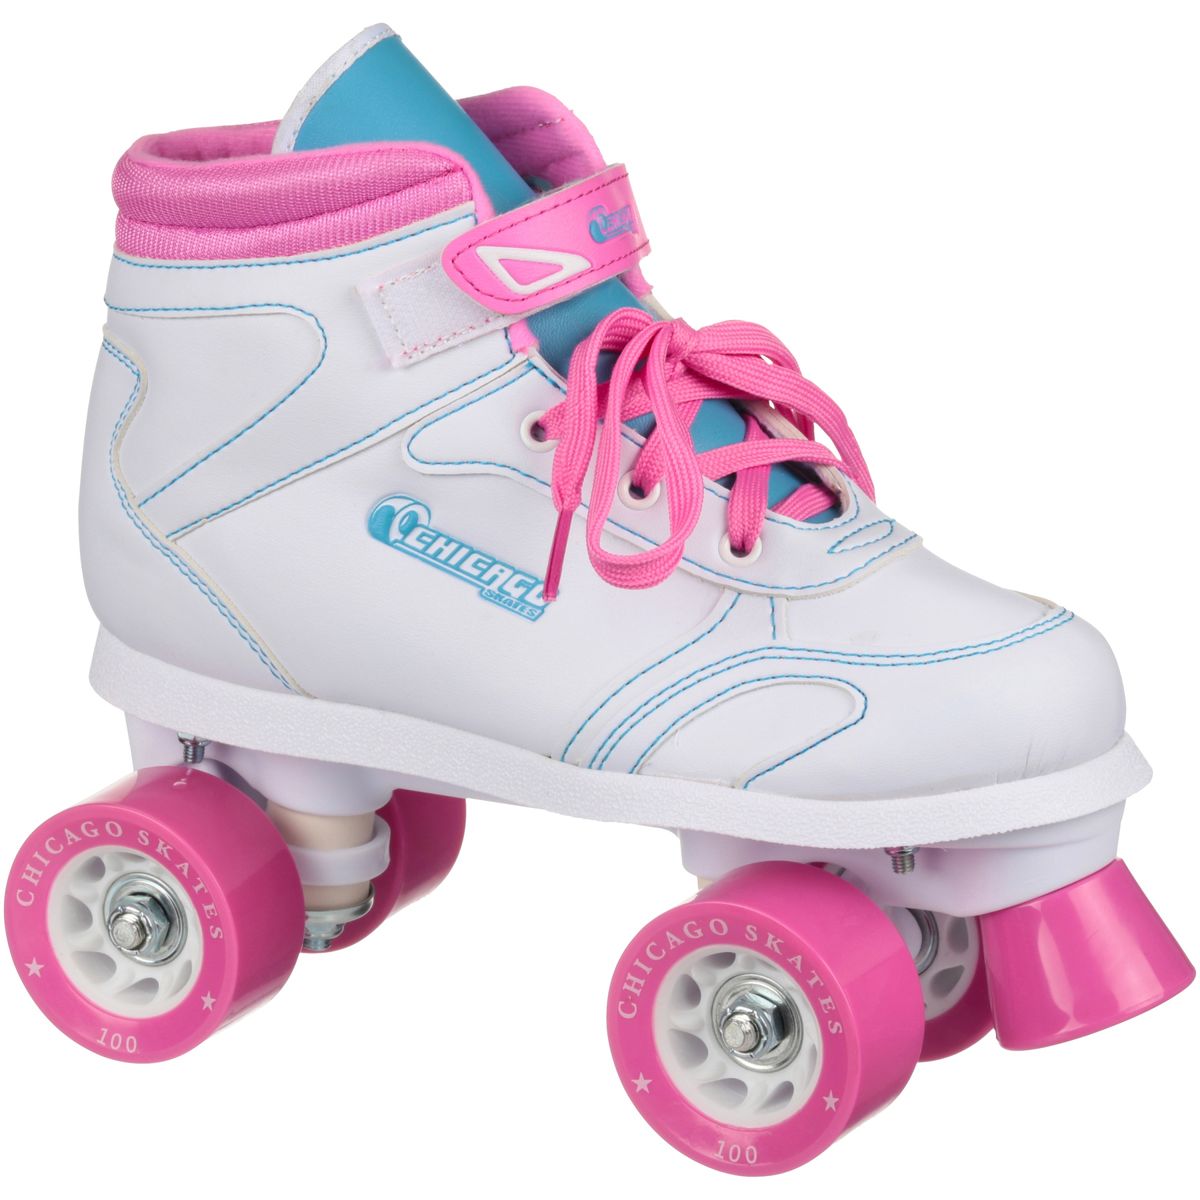 [RDY] [送料無料] Chicago Girls' Quad Roller Skates White/Pink/Teal Sidewalk Skates, Size 2 [楽天海外通販] | Chicago Girls' Quad Roller Skates White/Pink/Teal Sidewalk Skates, Size 2